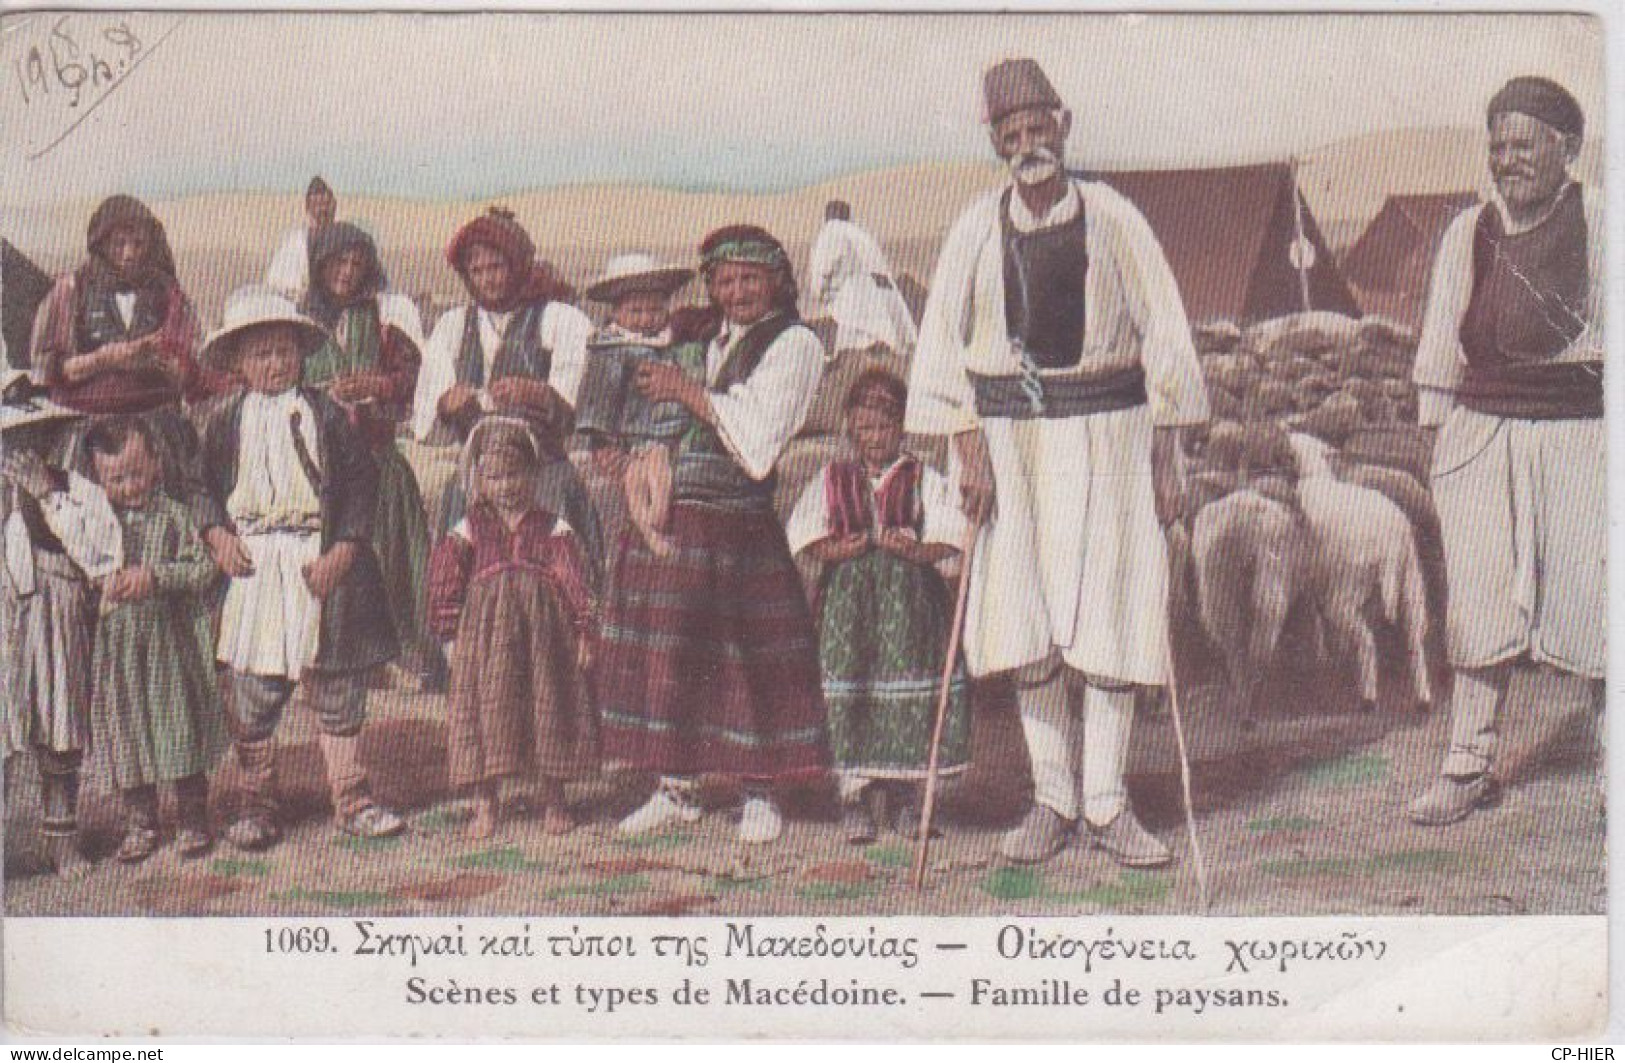 MACEDOINE DU NORD - Macedonia -  SCENES ET TYPES DE MACEDOINE - FAMILLE DE PAYSANS - North Macedonia